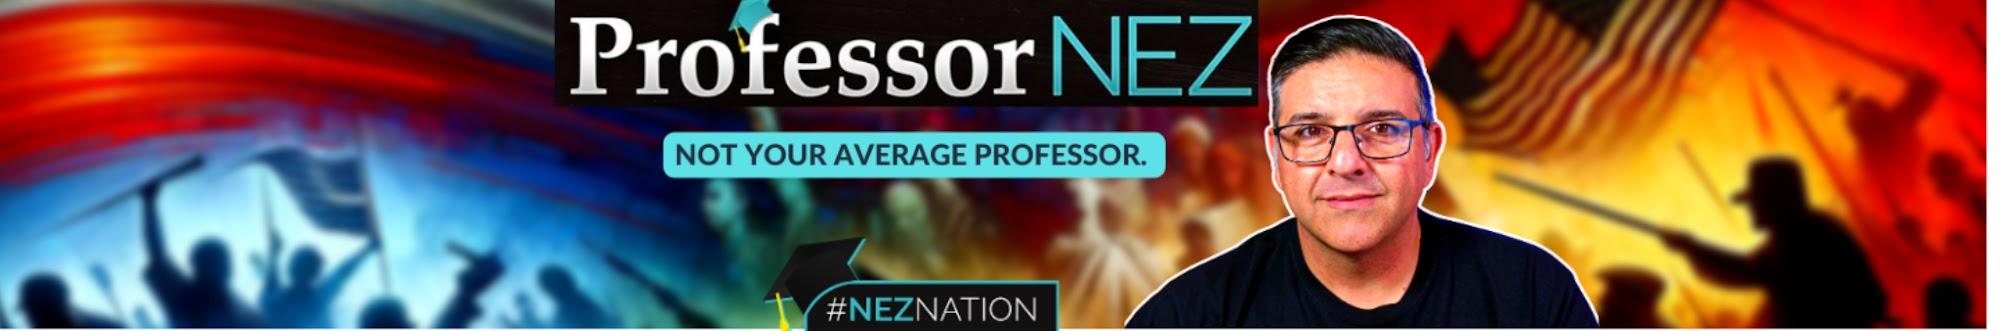 Professor Nez